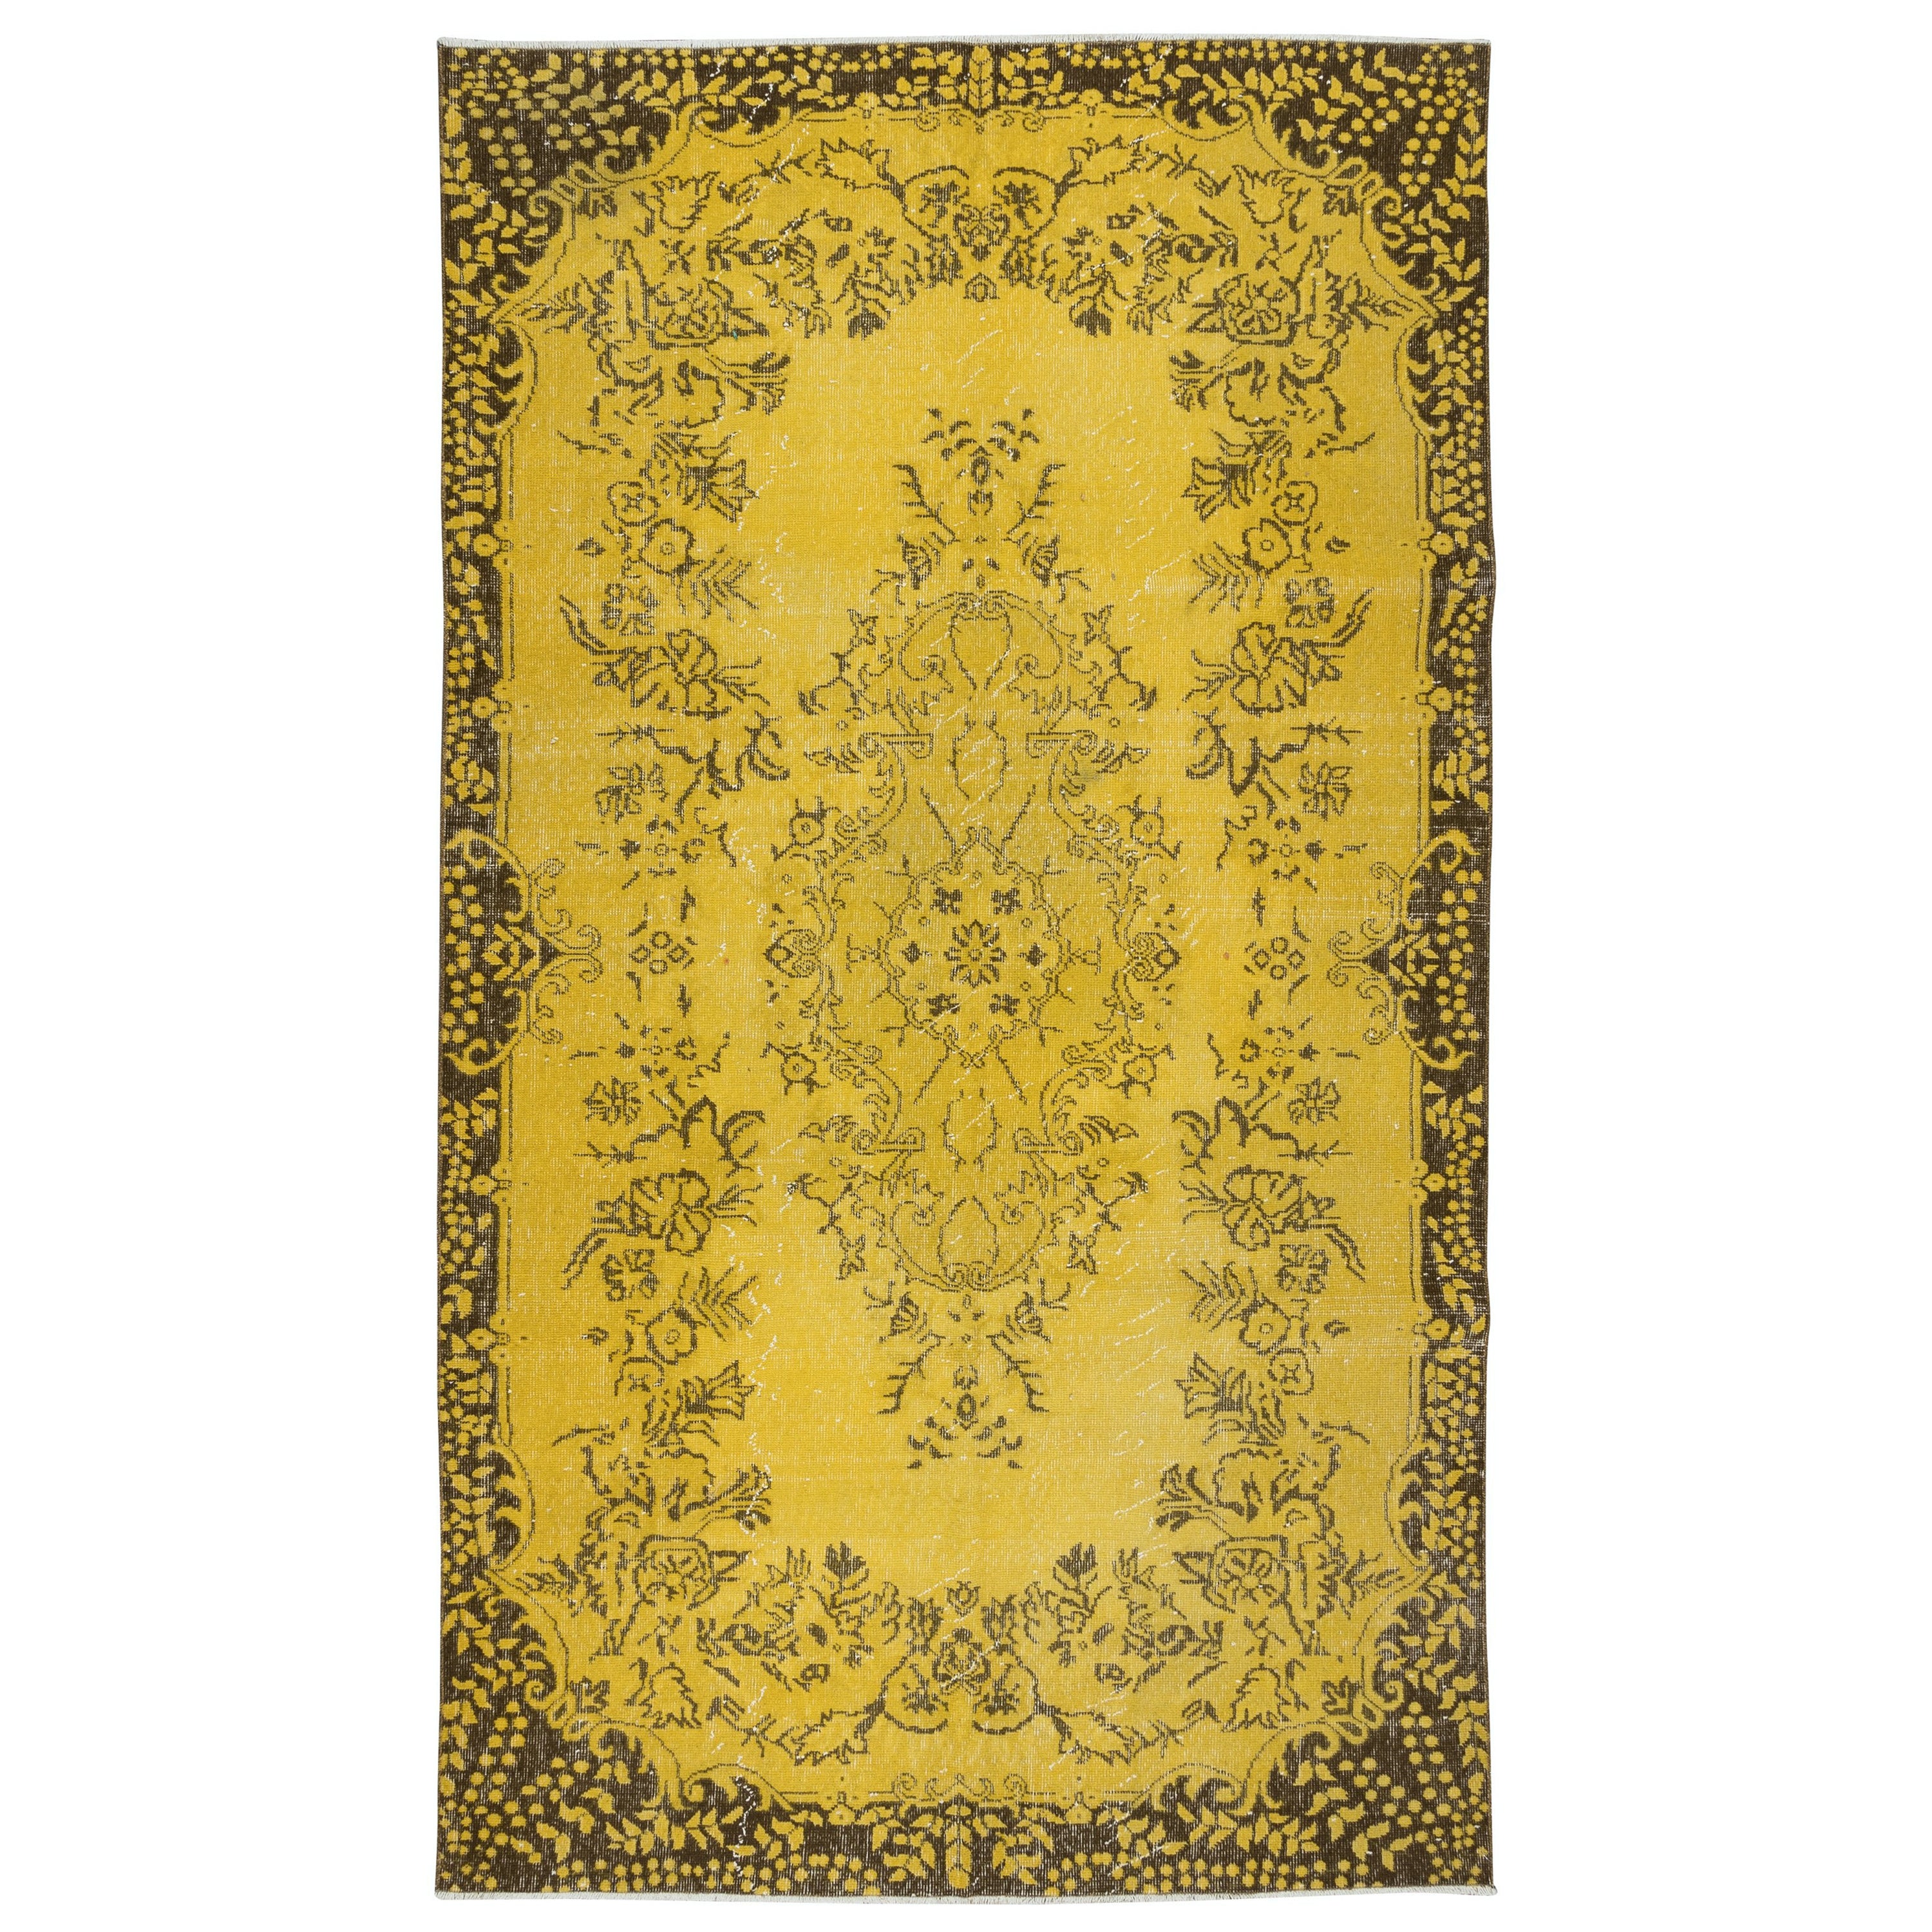 5.5x9.5 Ft Decorative Yellow Handmade Room Size Rug, Upcycled Turkish Carpet